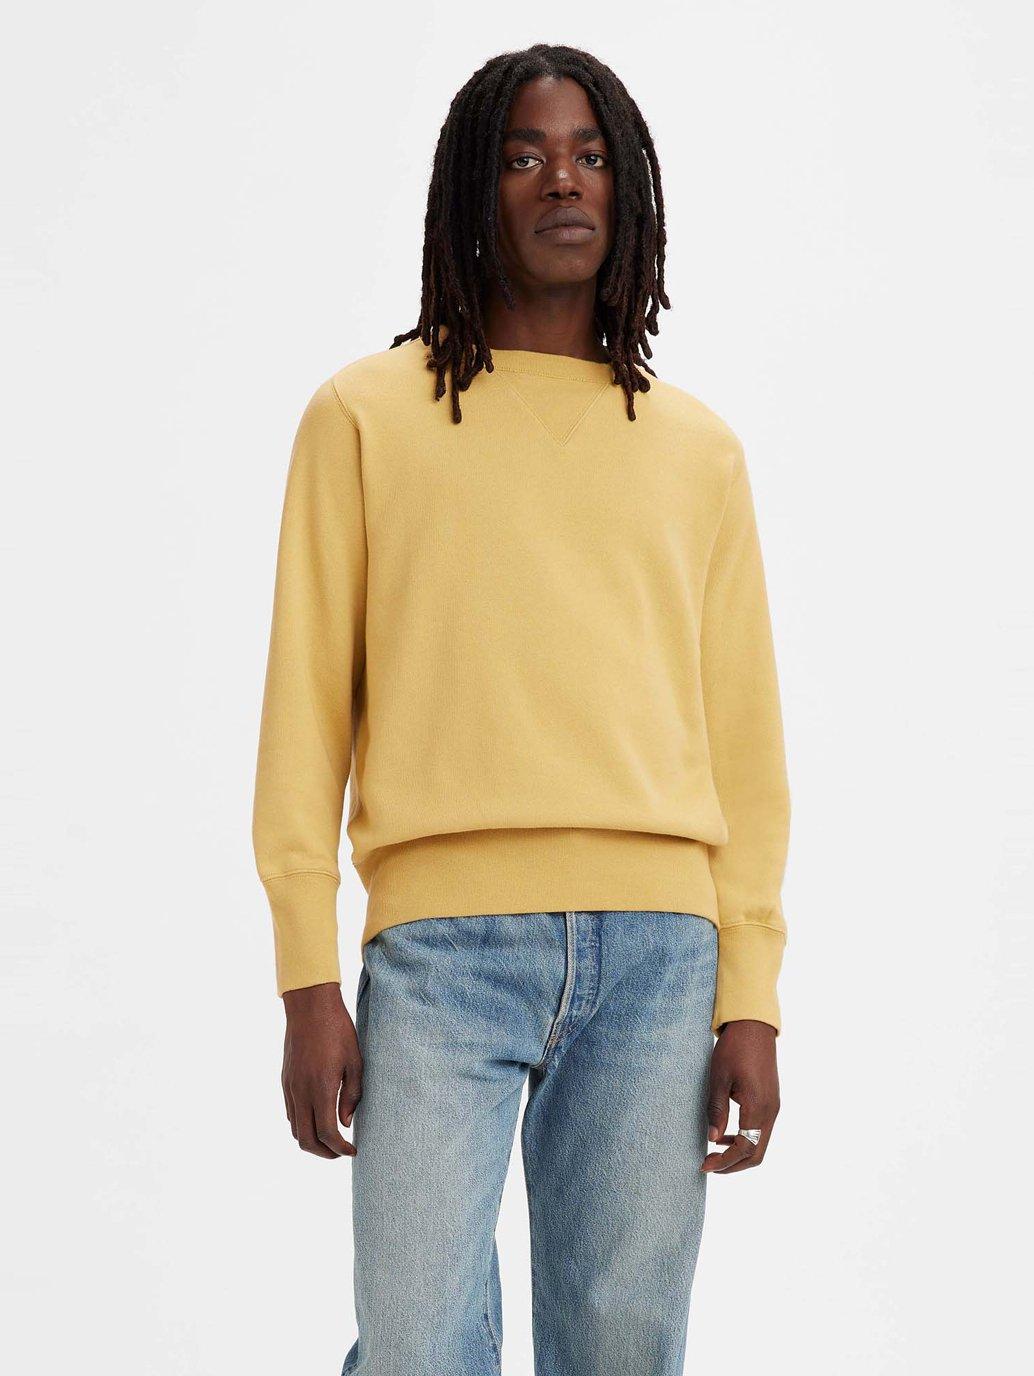 Introducir 48+ imagen levi’s vintage clothing sweatshirt